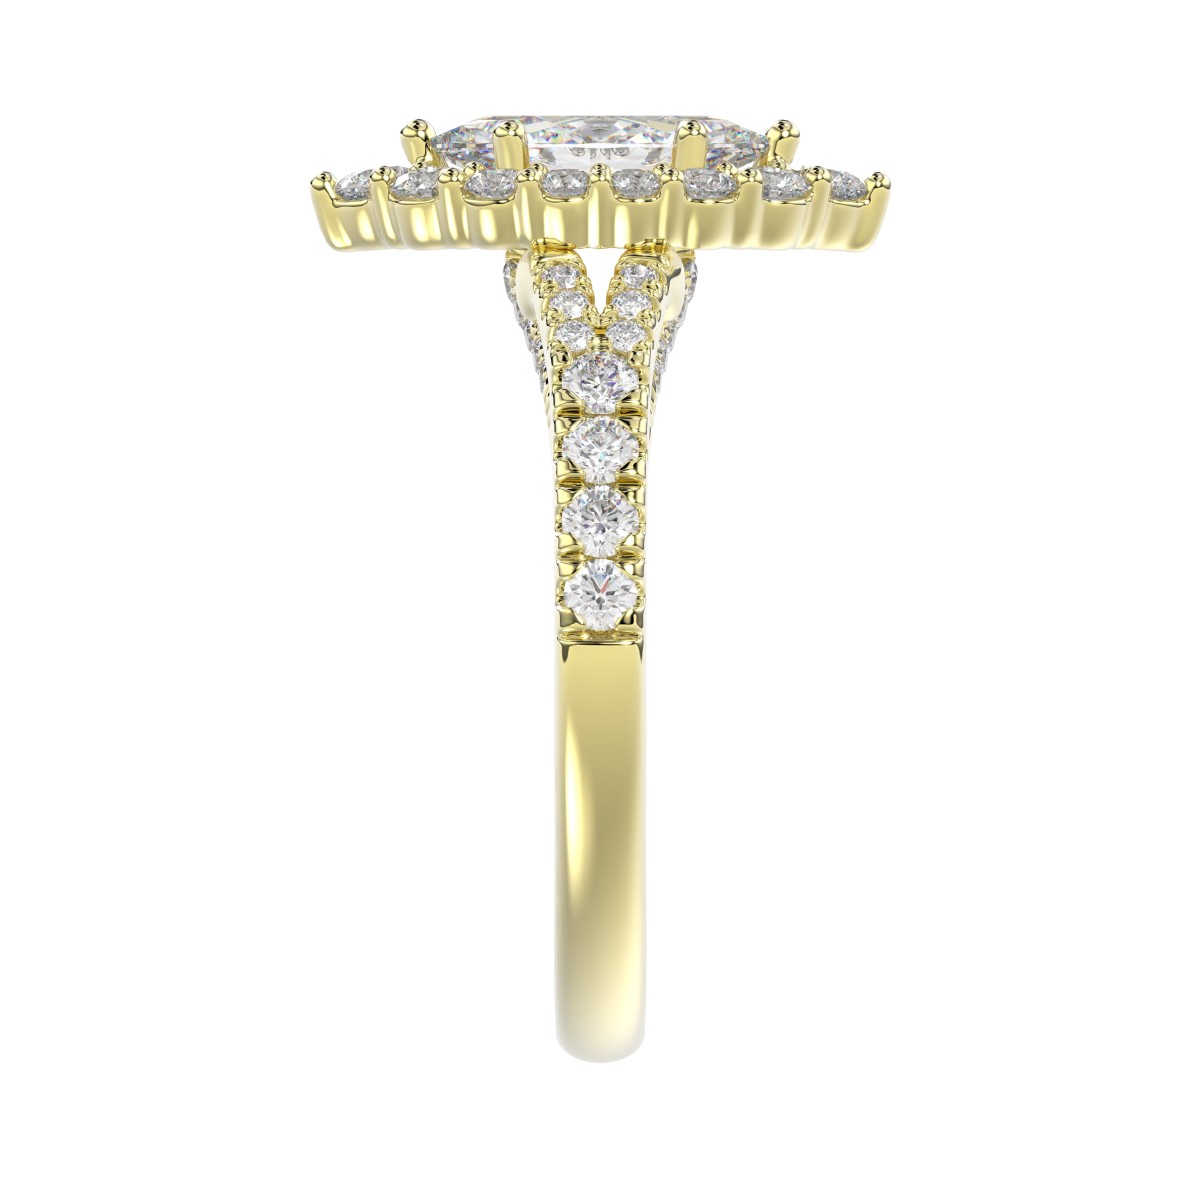 18K YELLOW GOLD 1 3/4CT ROUND/MARQUISE DIAMOND LADIES RING(CENTER STONE MARQUISE DIAMOND 1CT)